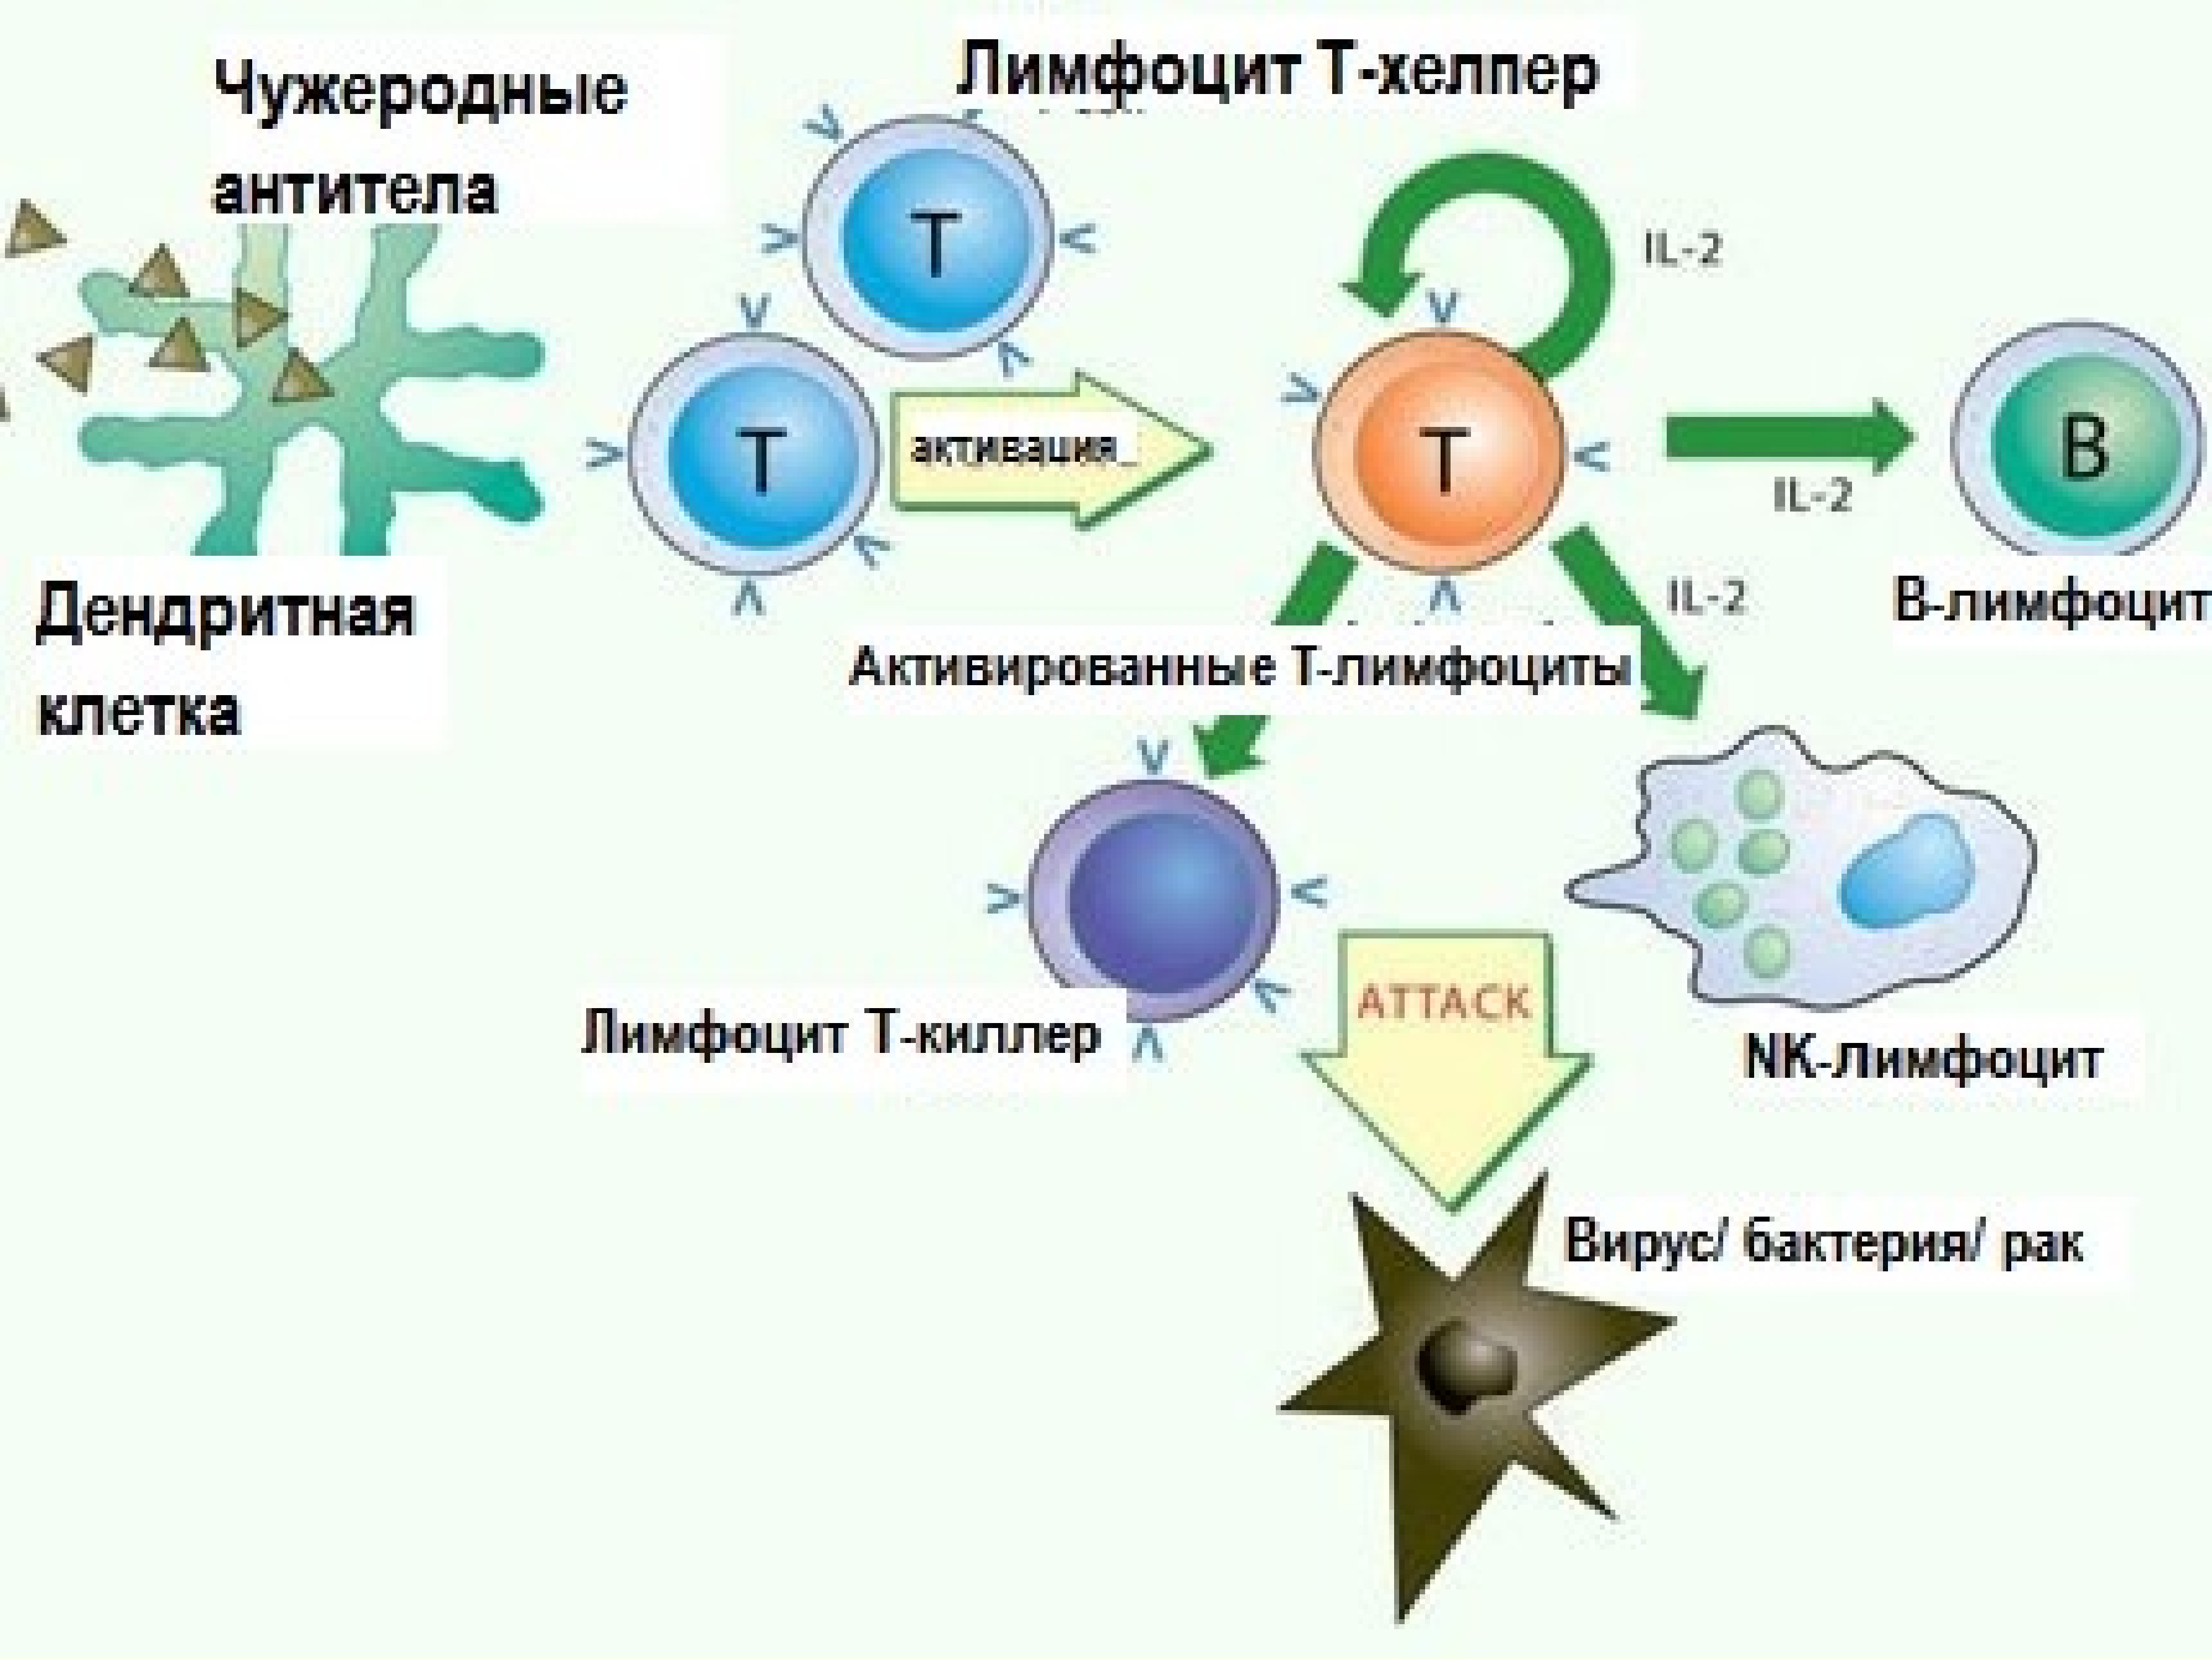 Макрофаги антитела